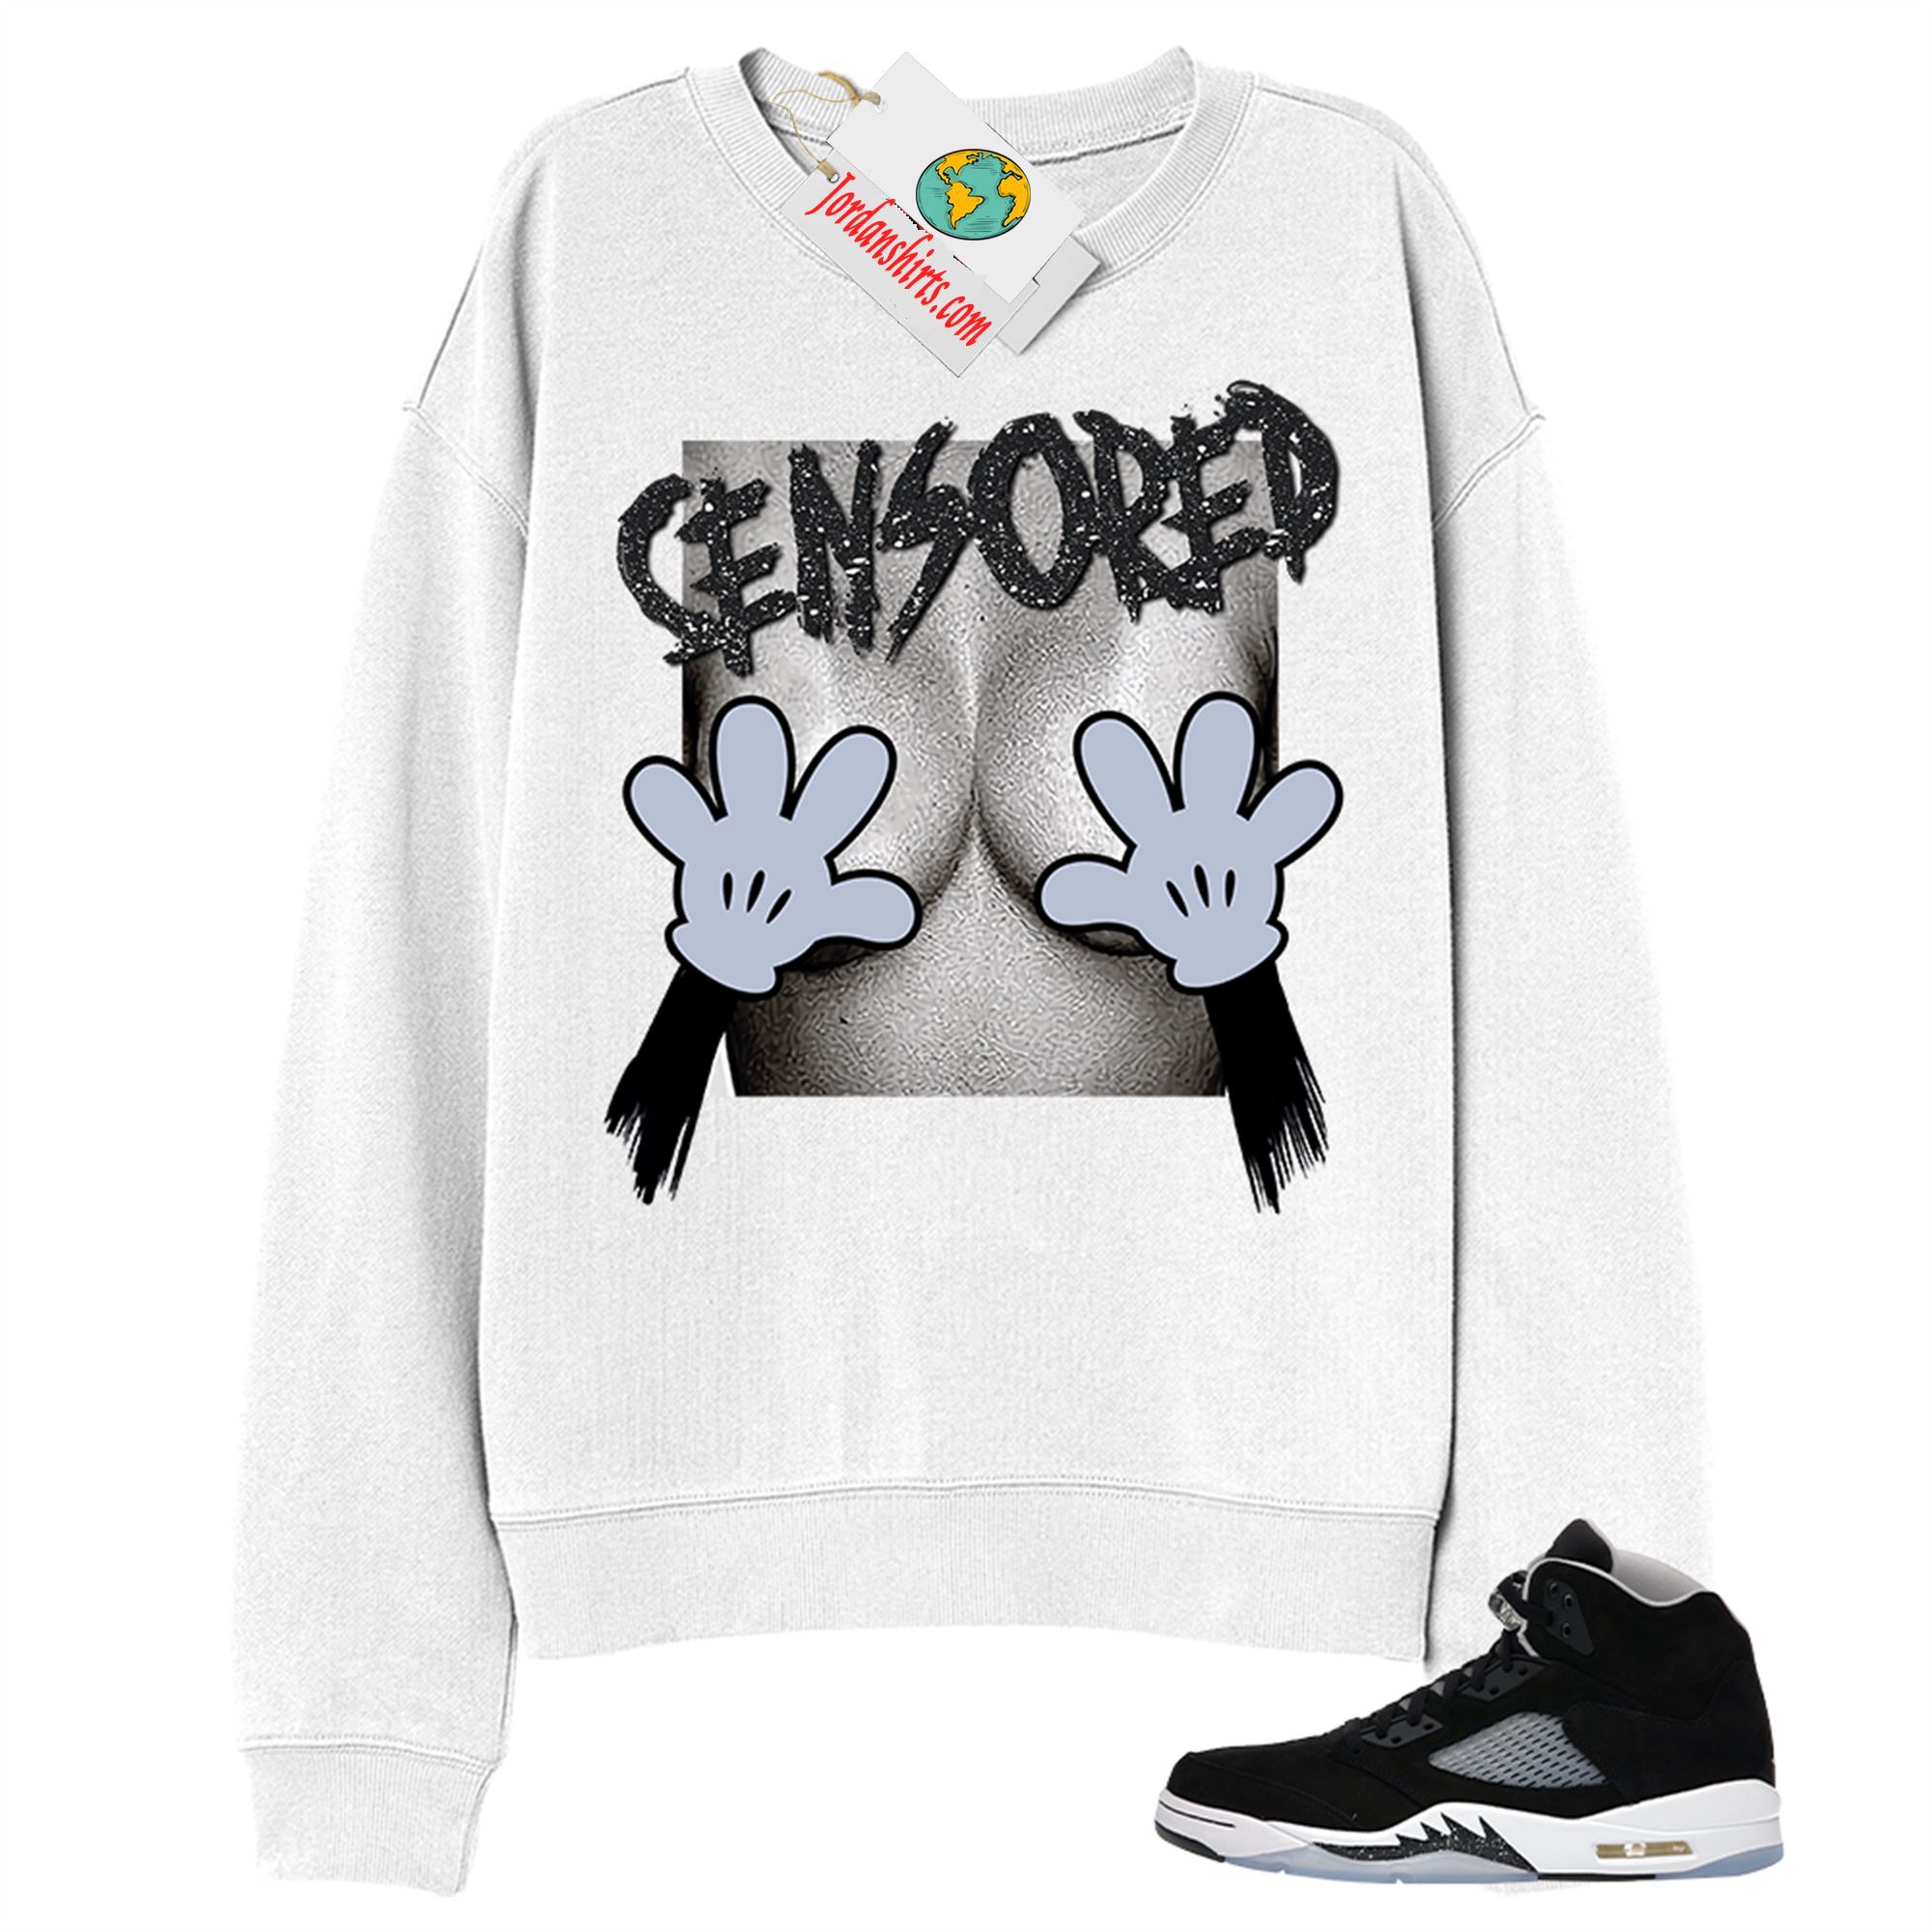 Jordan 5 Sweatshirt, Mickey Boobs Censored White Sweatshirt Air Jordan 5 Moonlight 5s Plus Size Up To 5xl